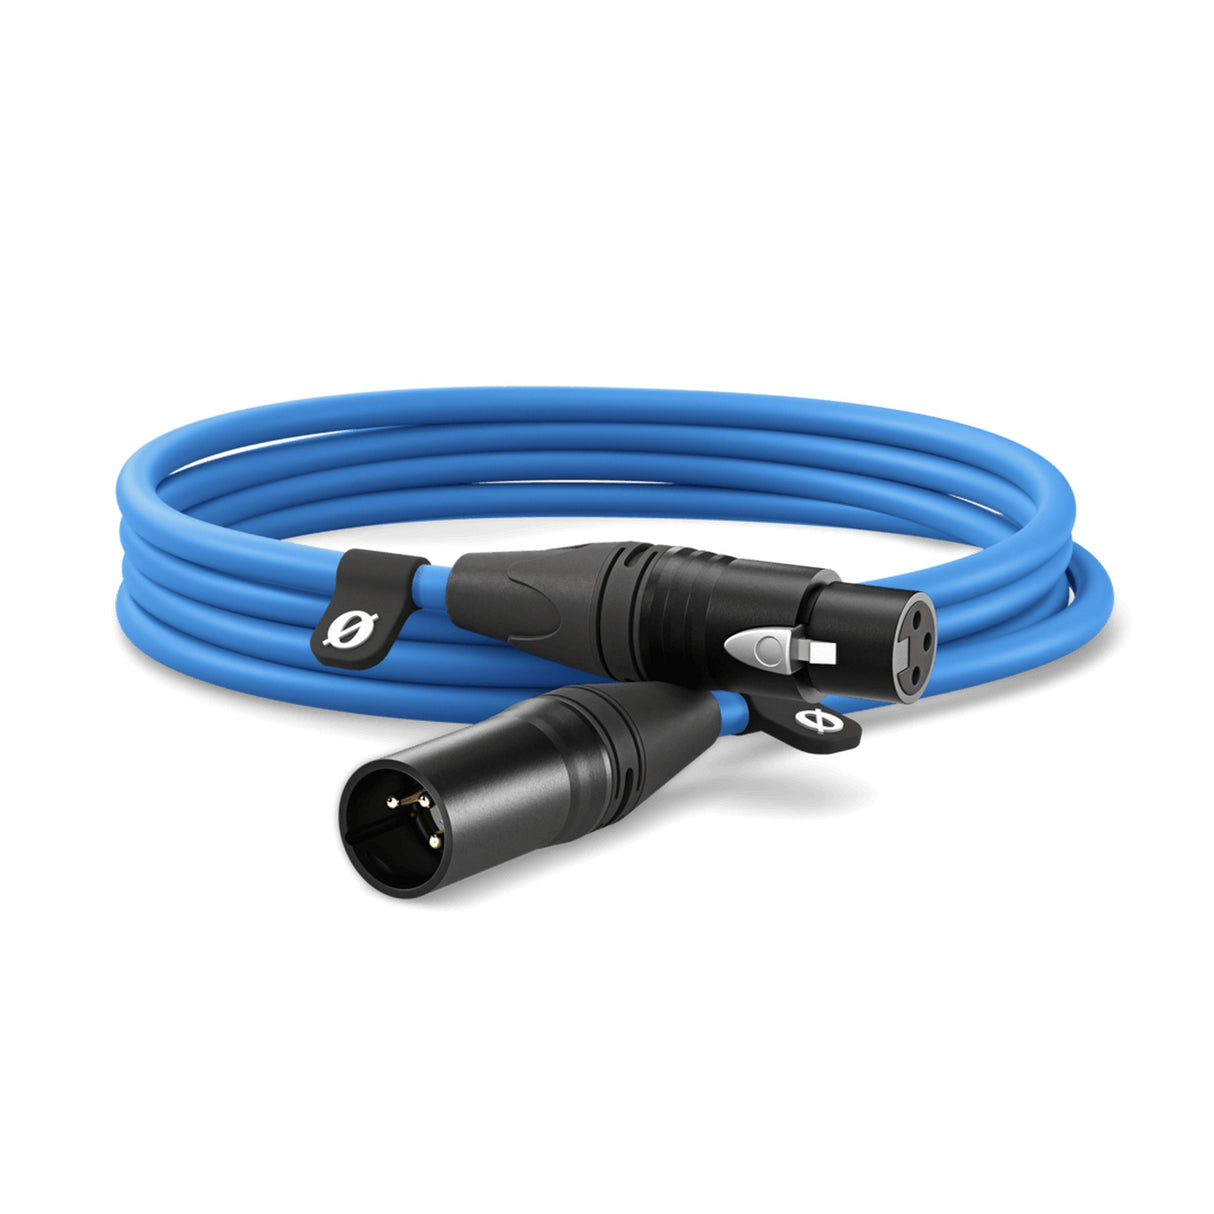 RODE XLR-3 3-Foot Premium Male to Female XLR Cable, Blue